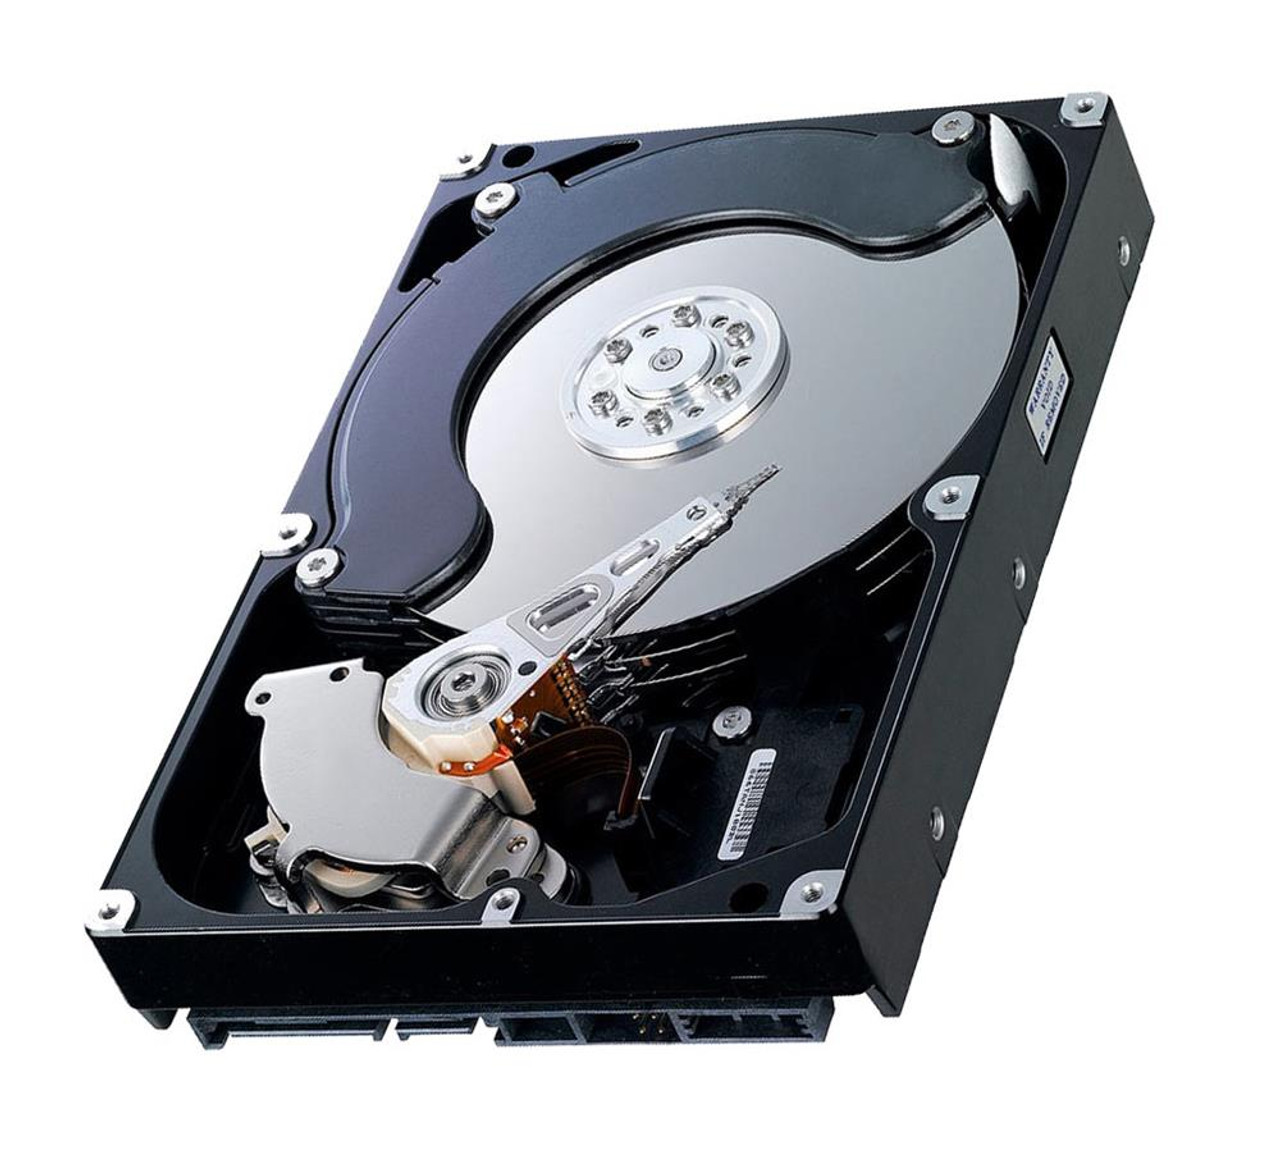 WD170AA-60AAA4 - Western Digital Caviar 17GB 5400RPM ATA-66 2MB Cache 3.5-inch Hard Disk Drive